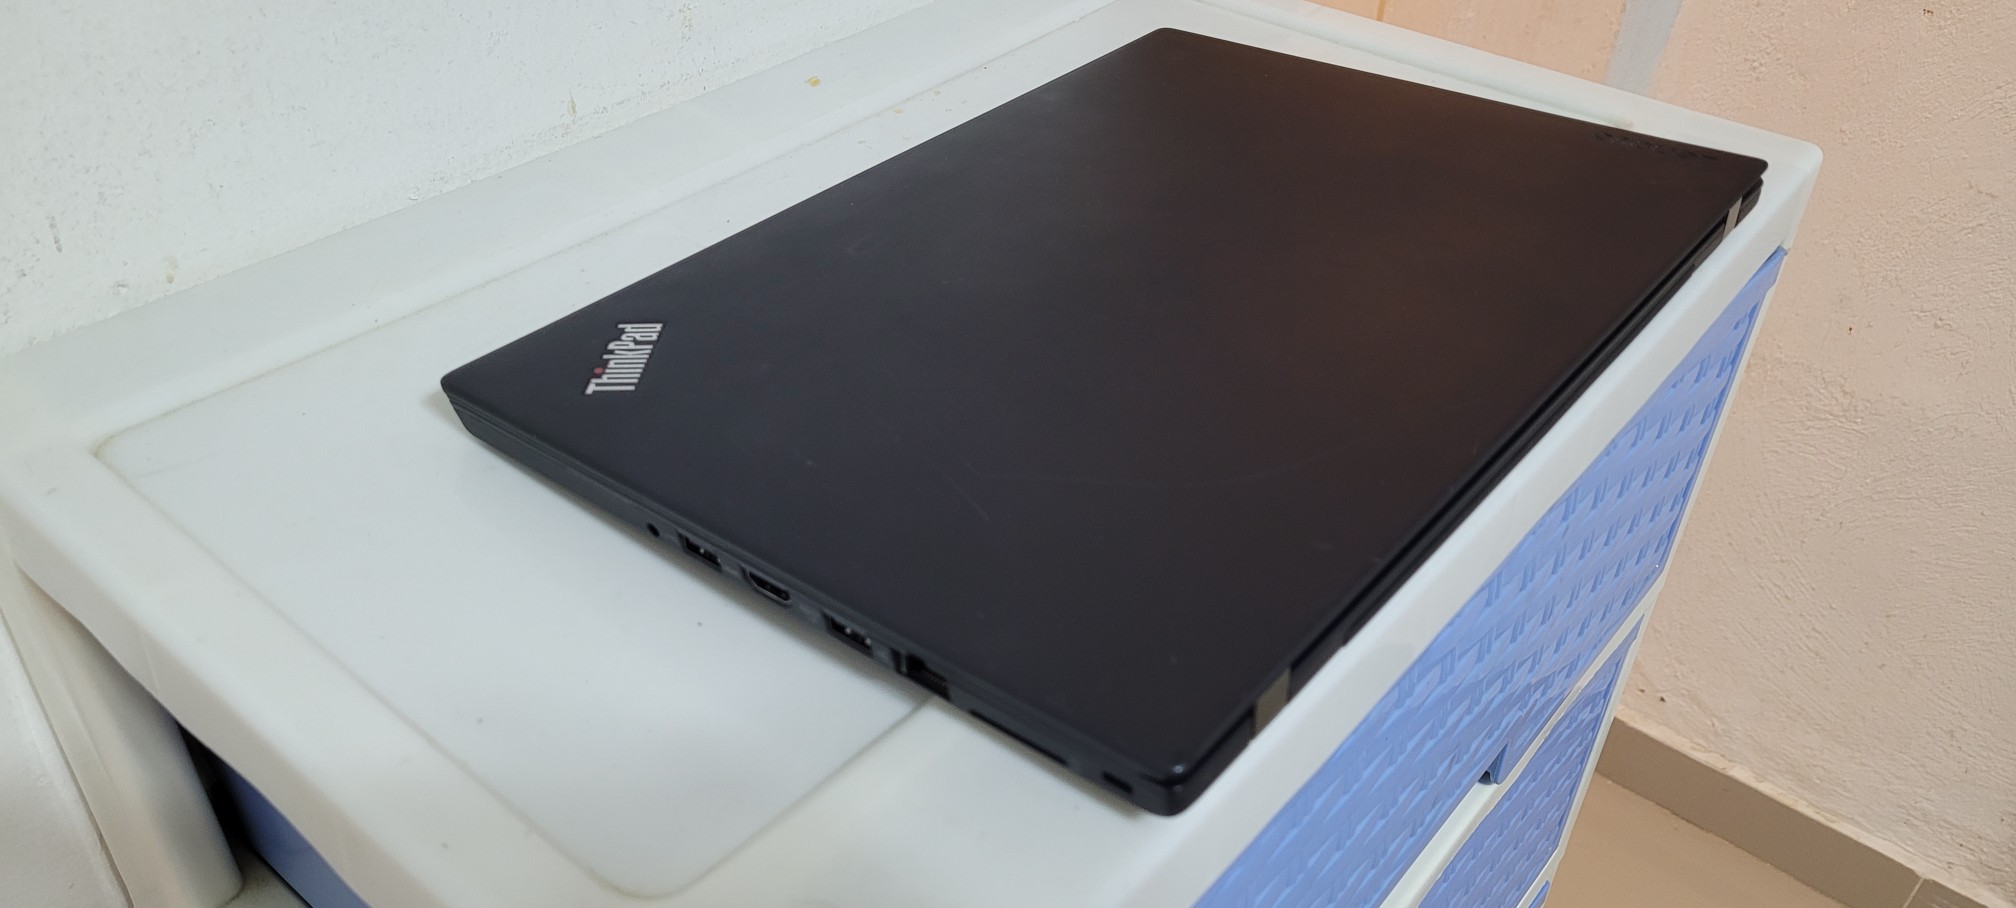 computadoras y laptops - Lenovo T470 14 Pulg Core i7 7ma Ram 12gb ddr4 Disco 256gb SSD Video 6gb 2